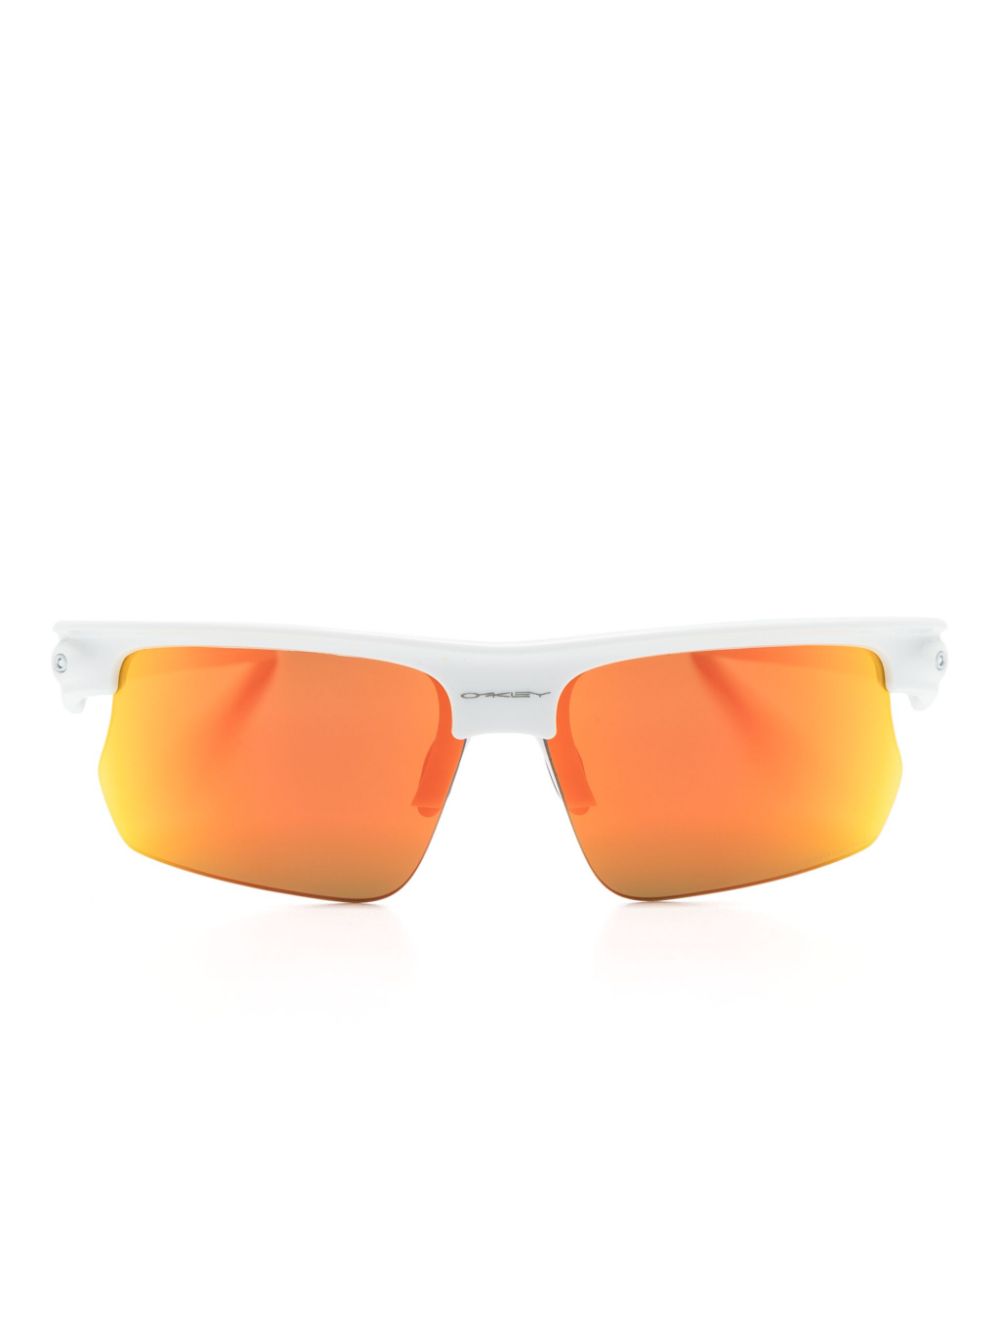 BiSphaera? rectangle-frame sunglasses<BR/><BR/><BR/>